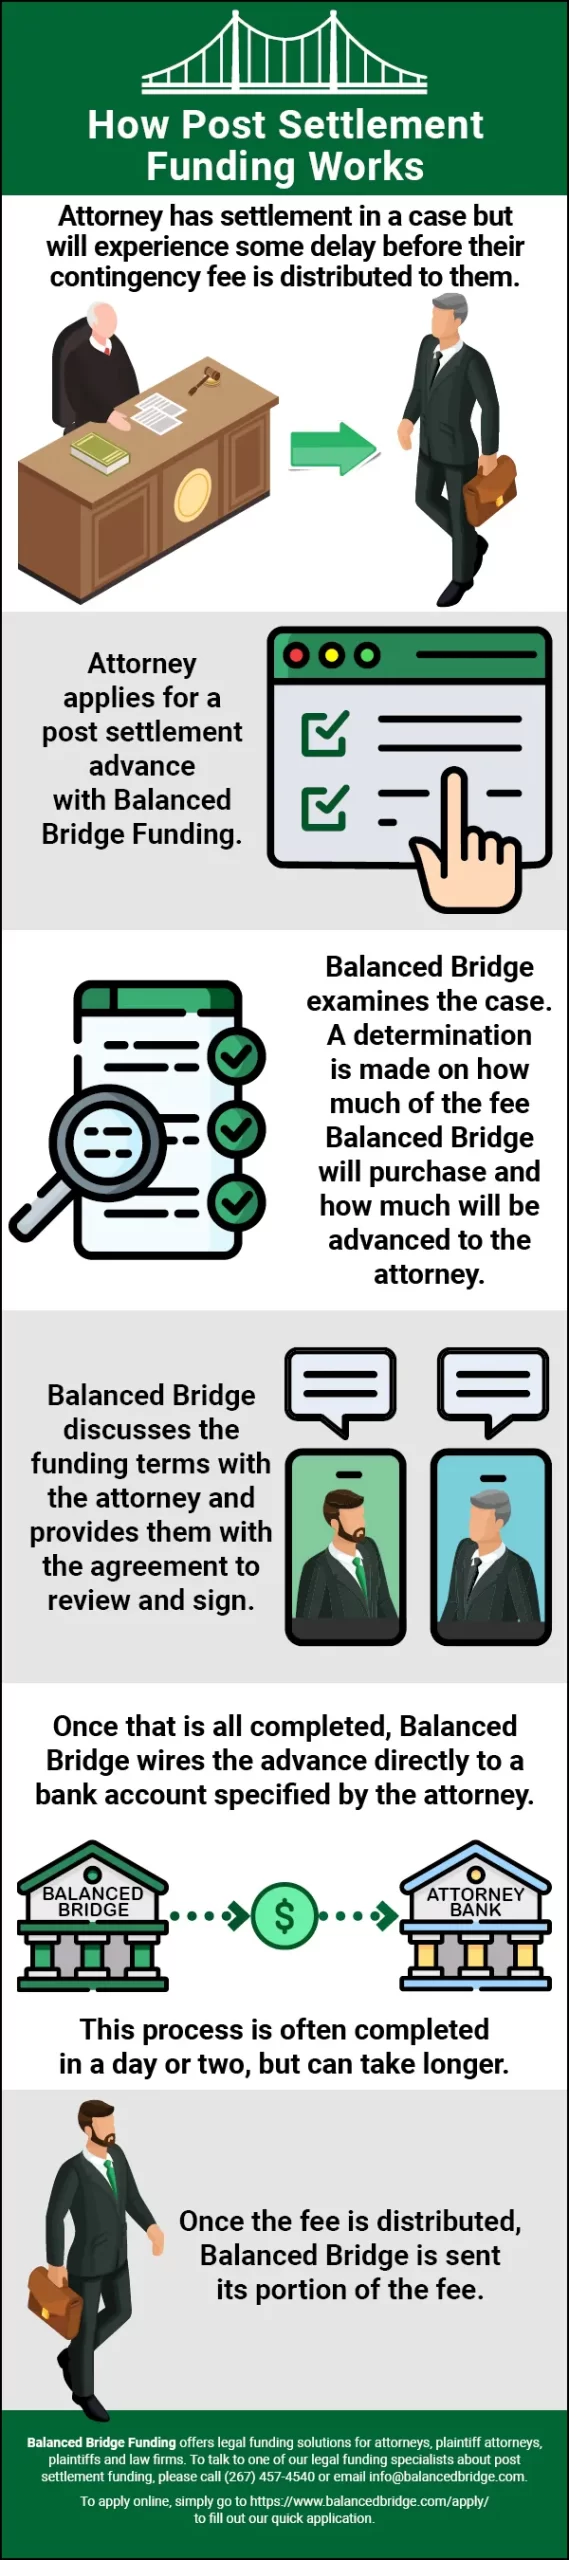 How post settlement funding for attorneys works